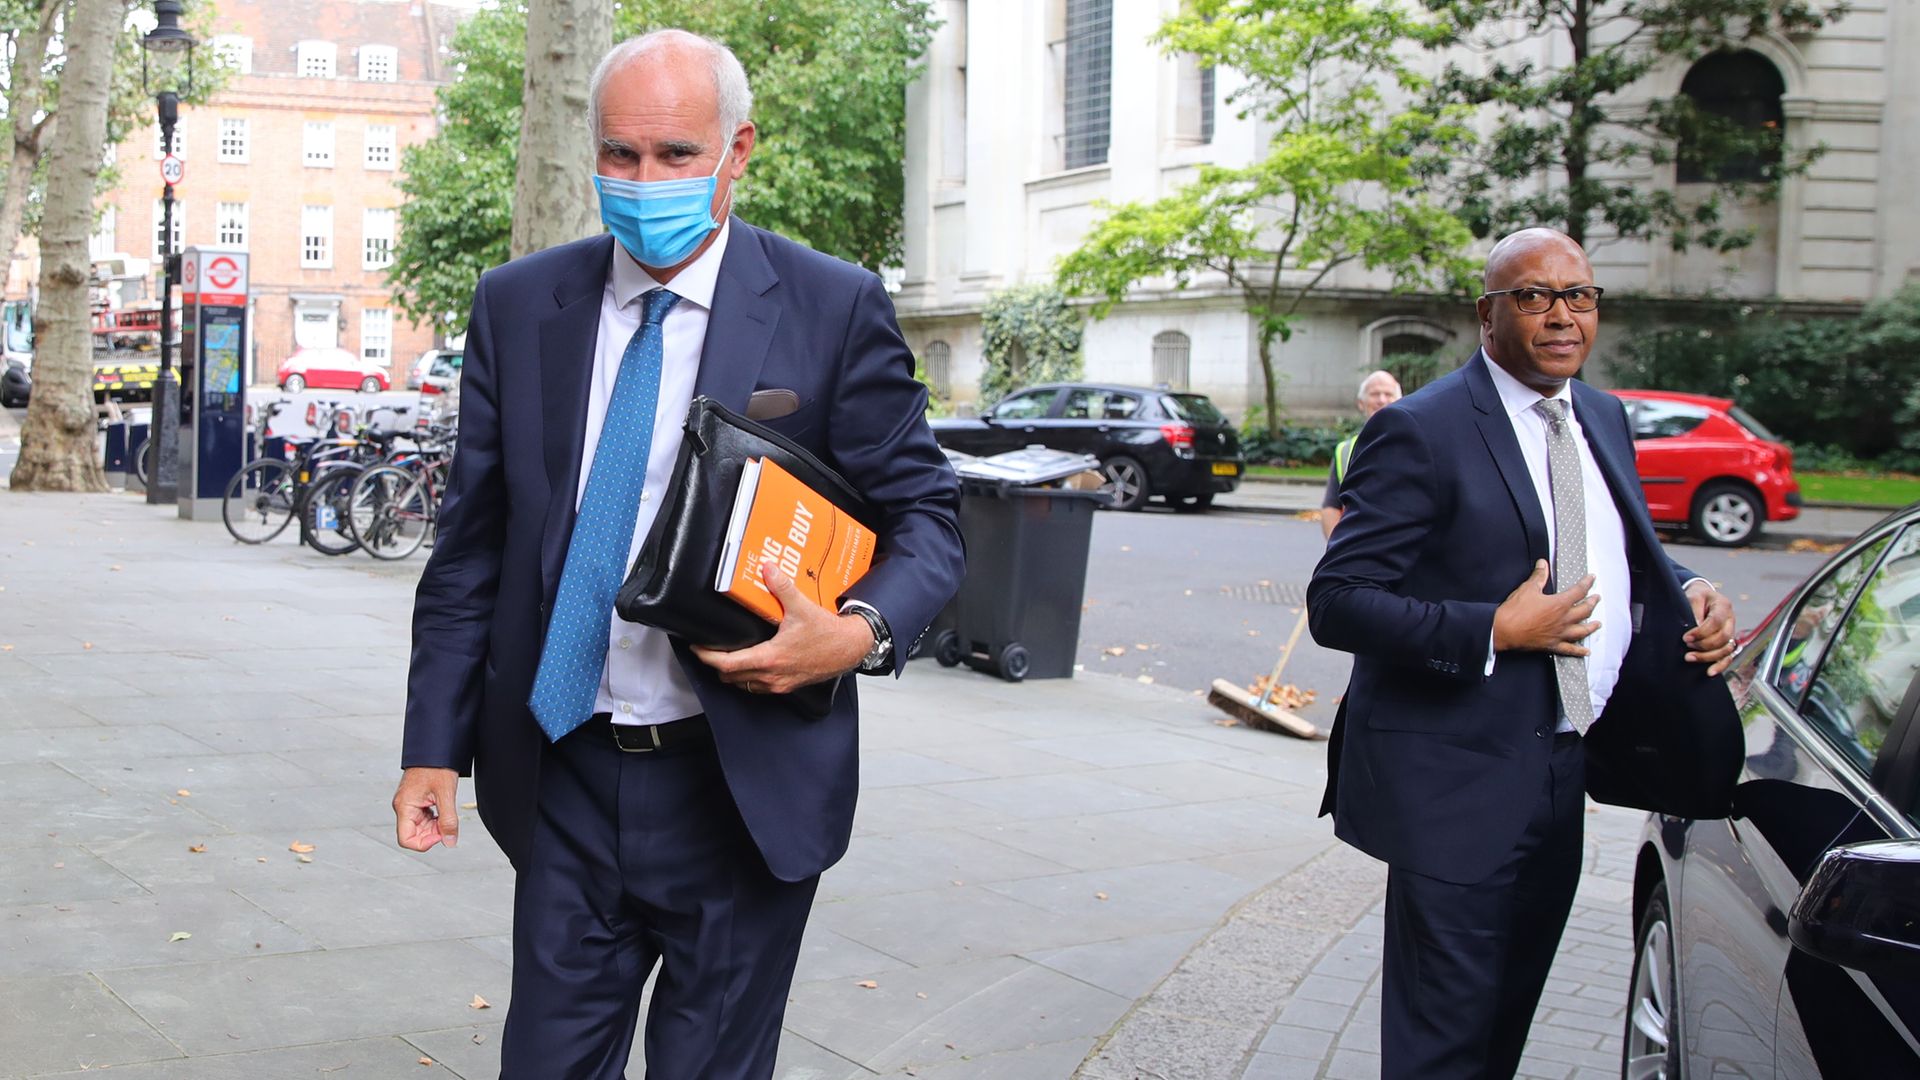 EU Ambassador to the UK, Portuguese diplomat Joao Vale de Almeida (left) arriving at Europe House in Westminster, London. - Credit: PA